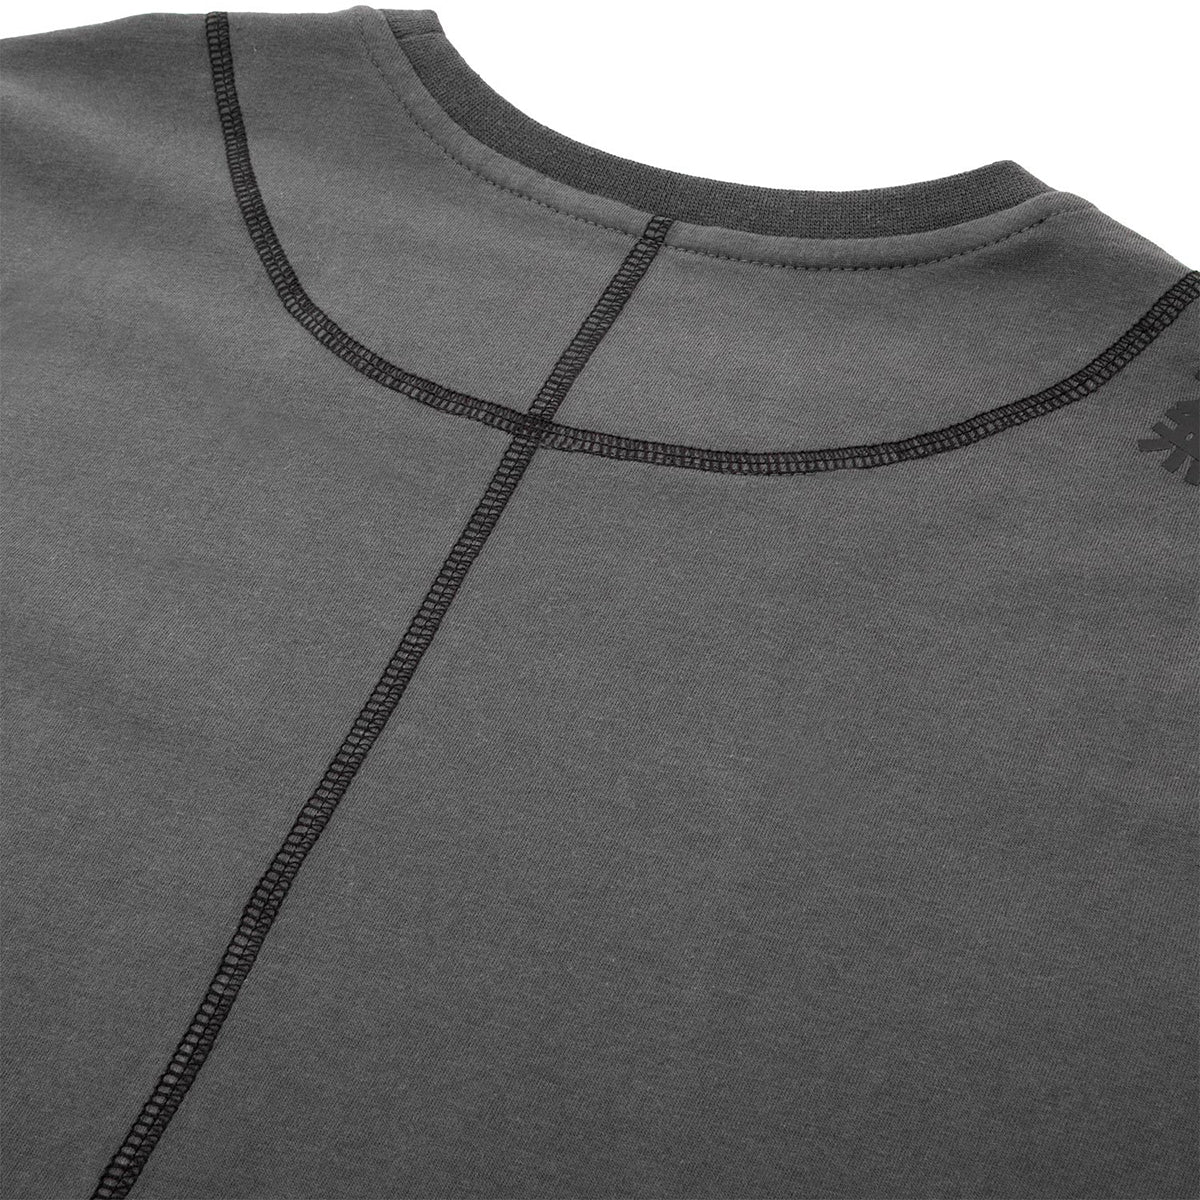 Venum Limitless Short Sleeve T-Shirt Venum